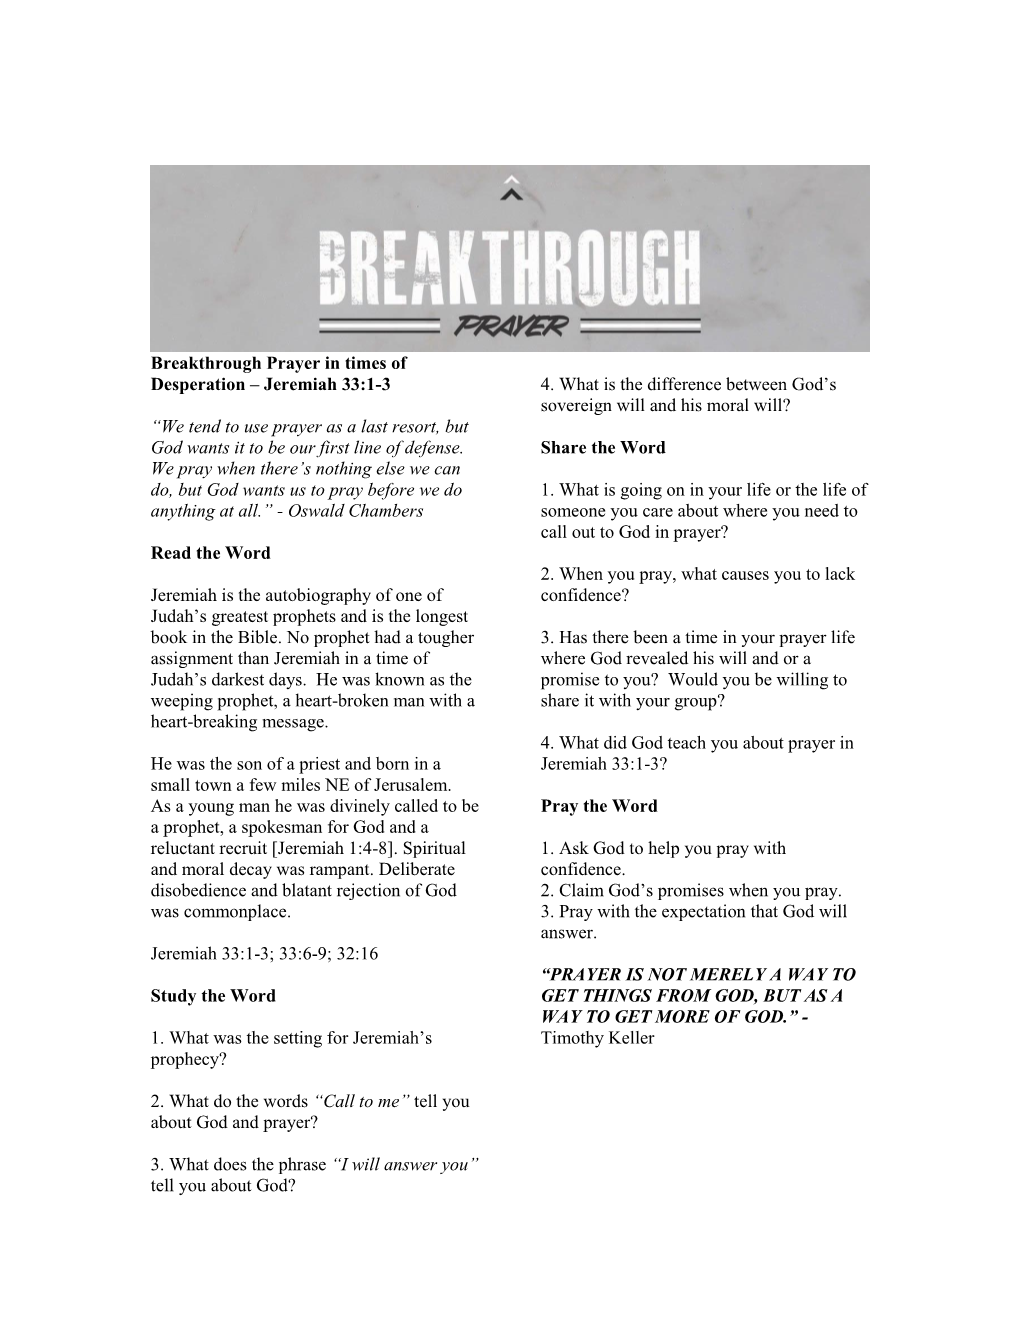 Breakthrough Prayer in Times of Desperation – Jeremiah 33:1-3 “We